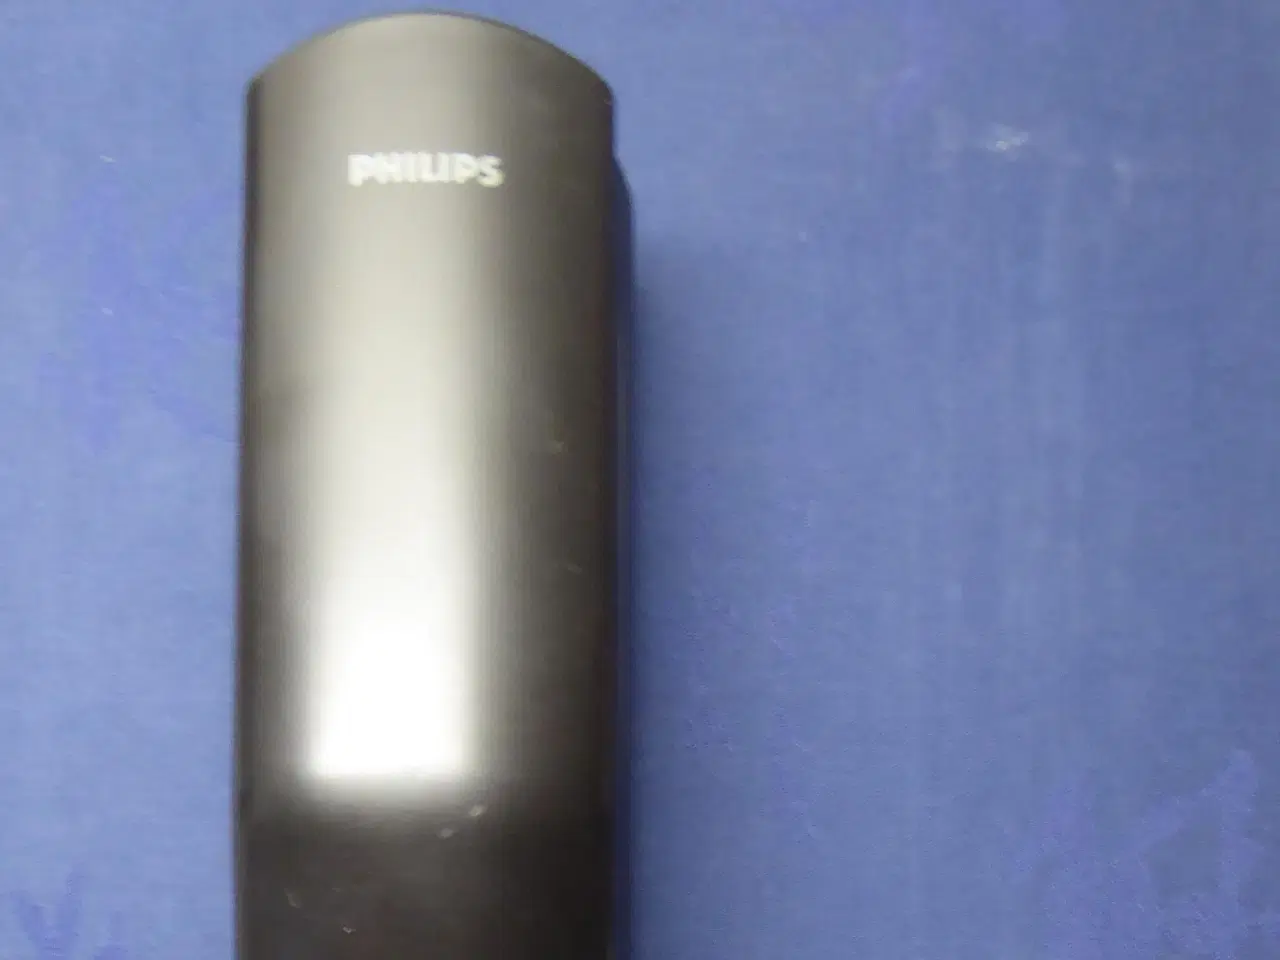 Billede 1 - Phillips og Designet telefoner